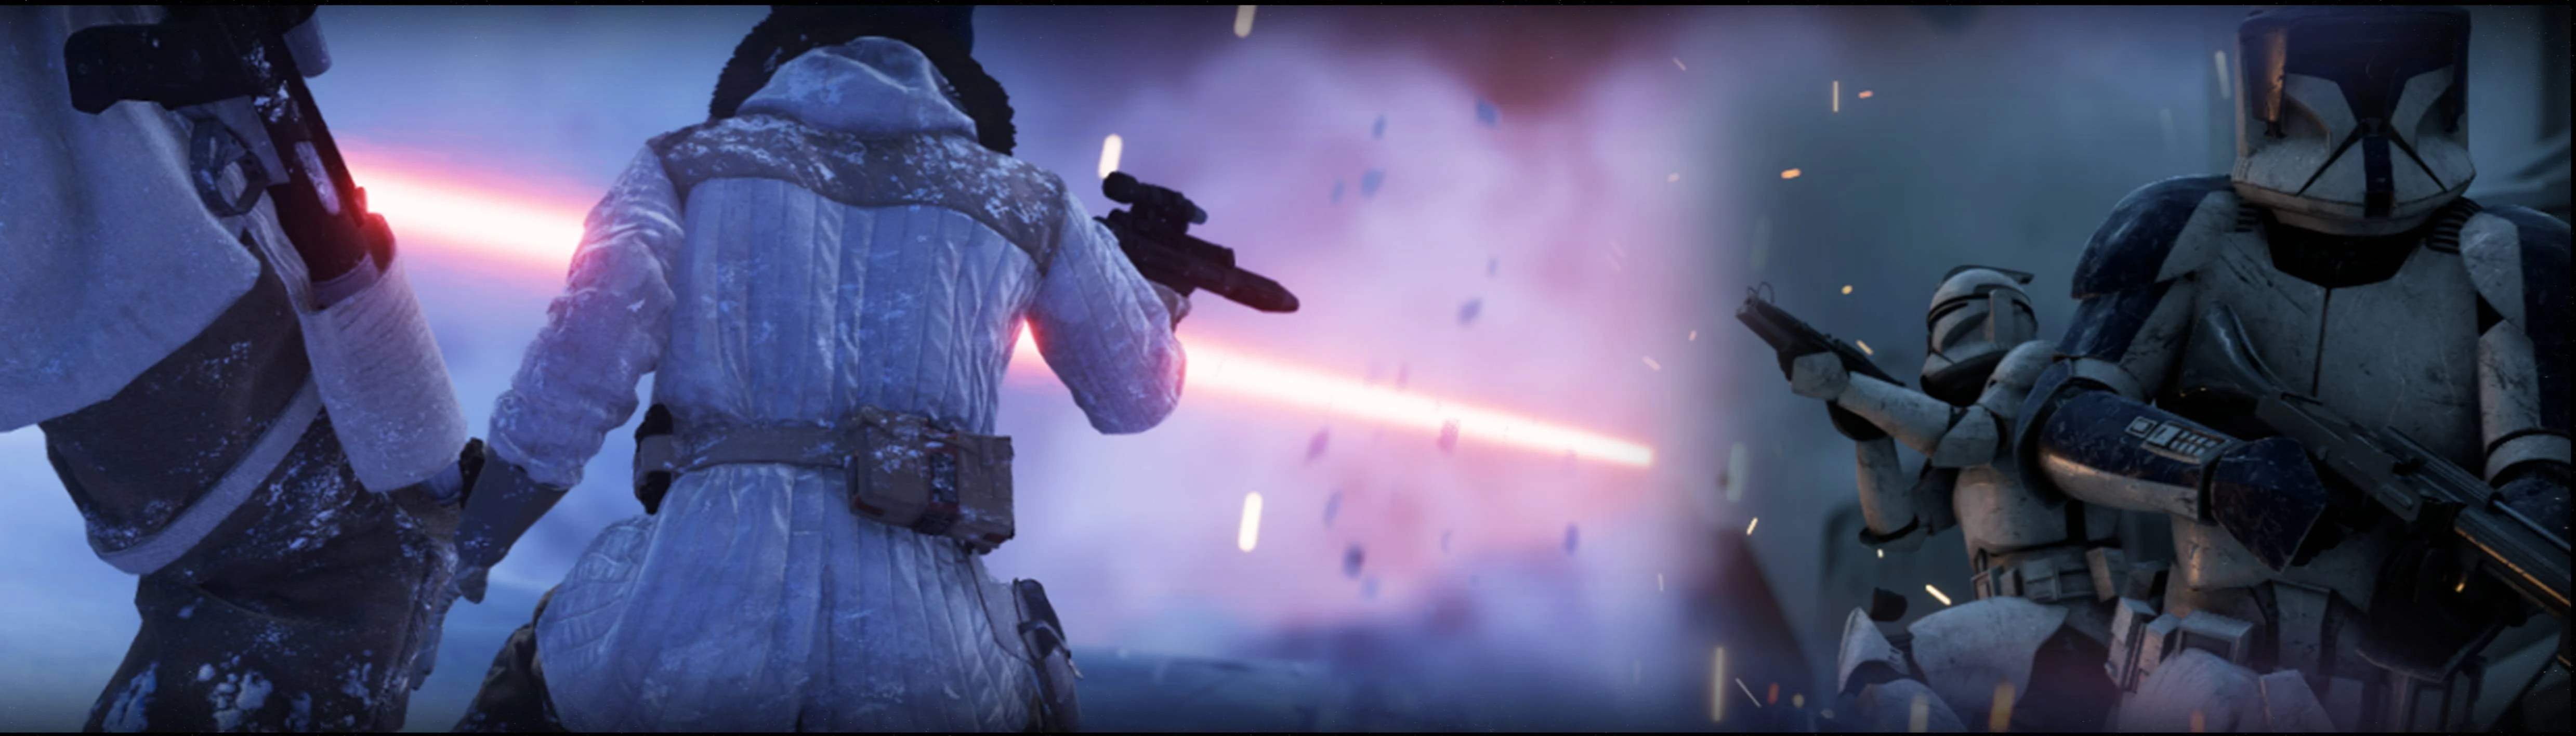 Battlefront 2022 (BF2022) at Star Wars: Battlefront II (2017) Nexus - Mods  and community